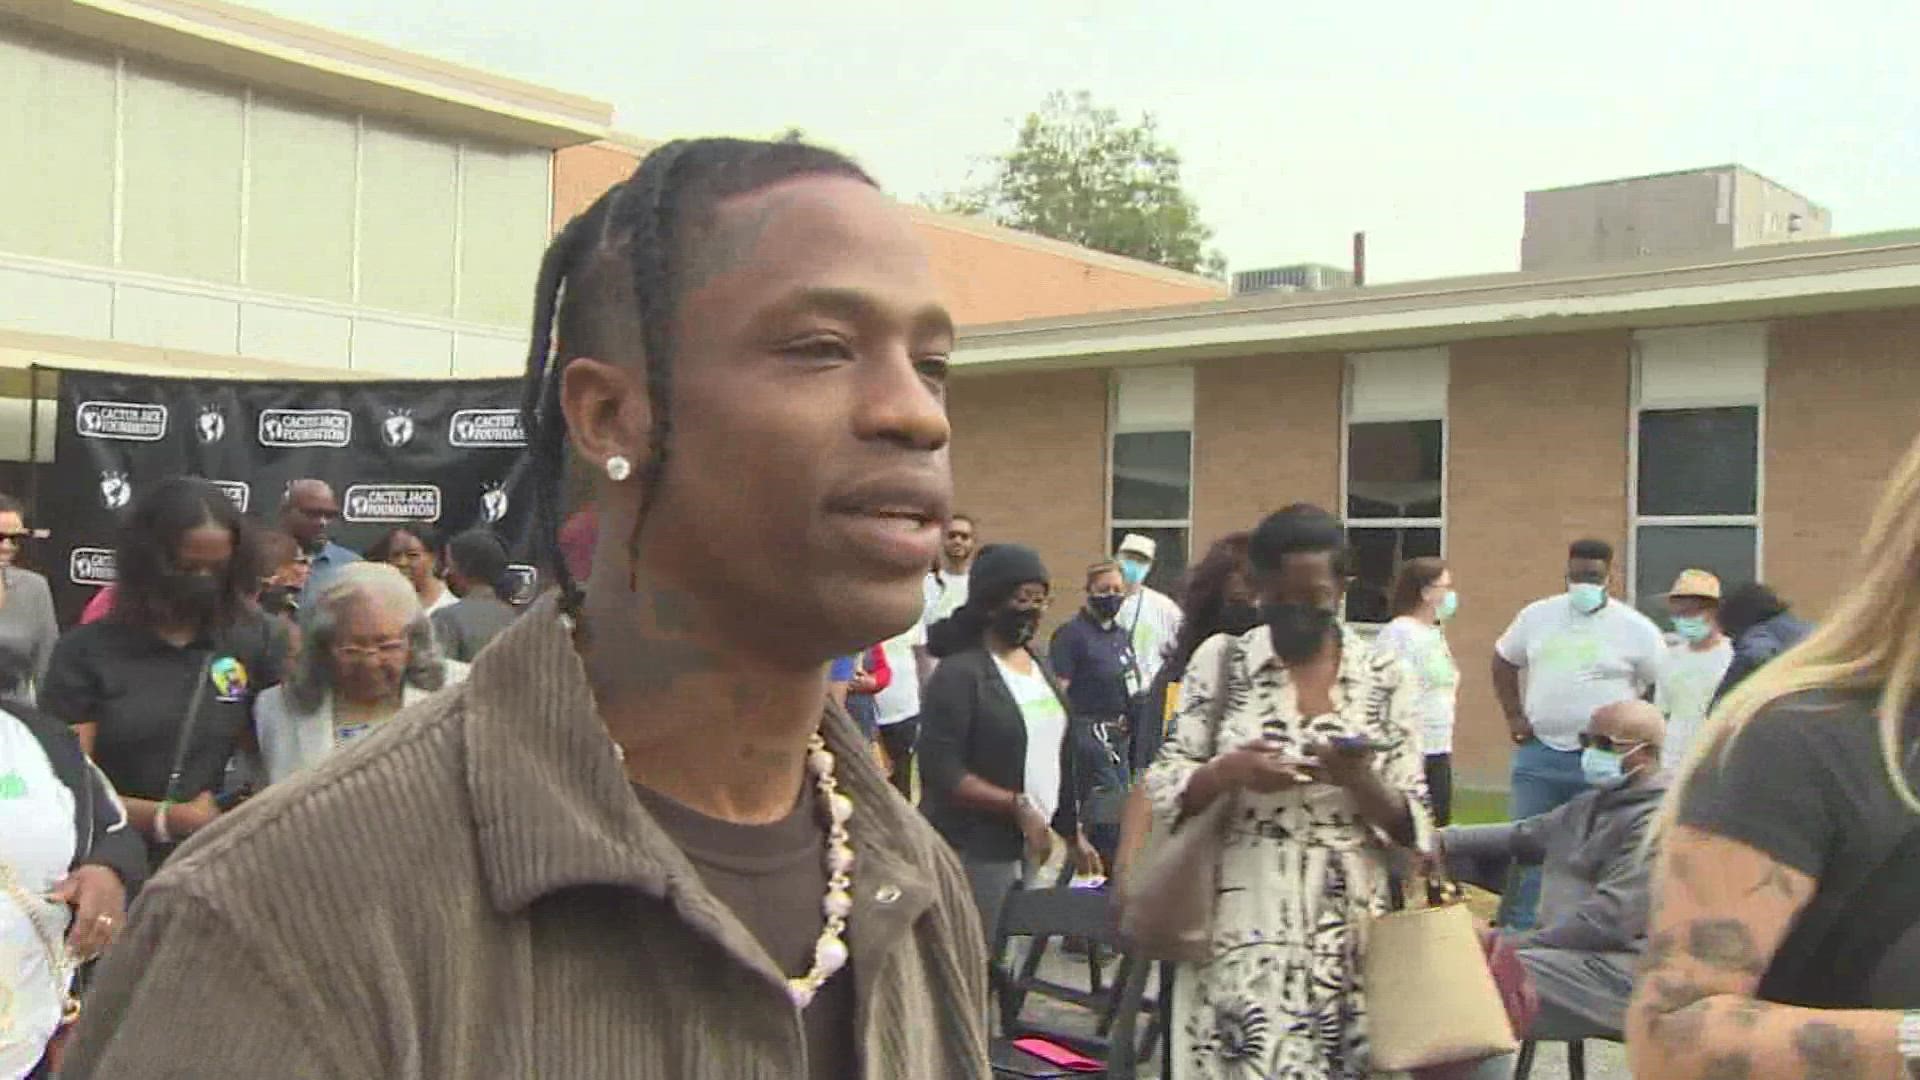 Rapper Travis Scott opens garden for Houston elementary school